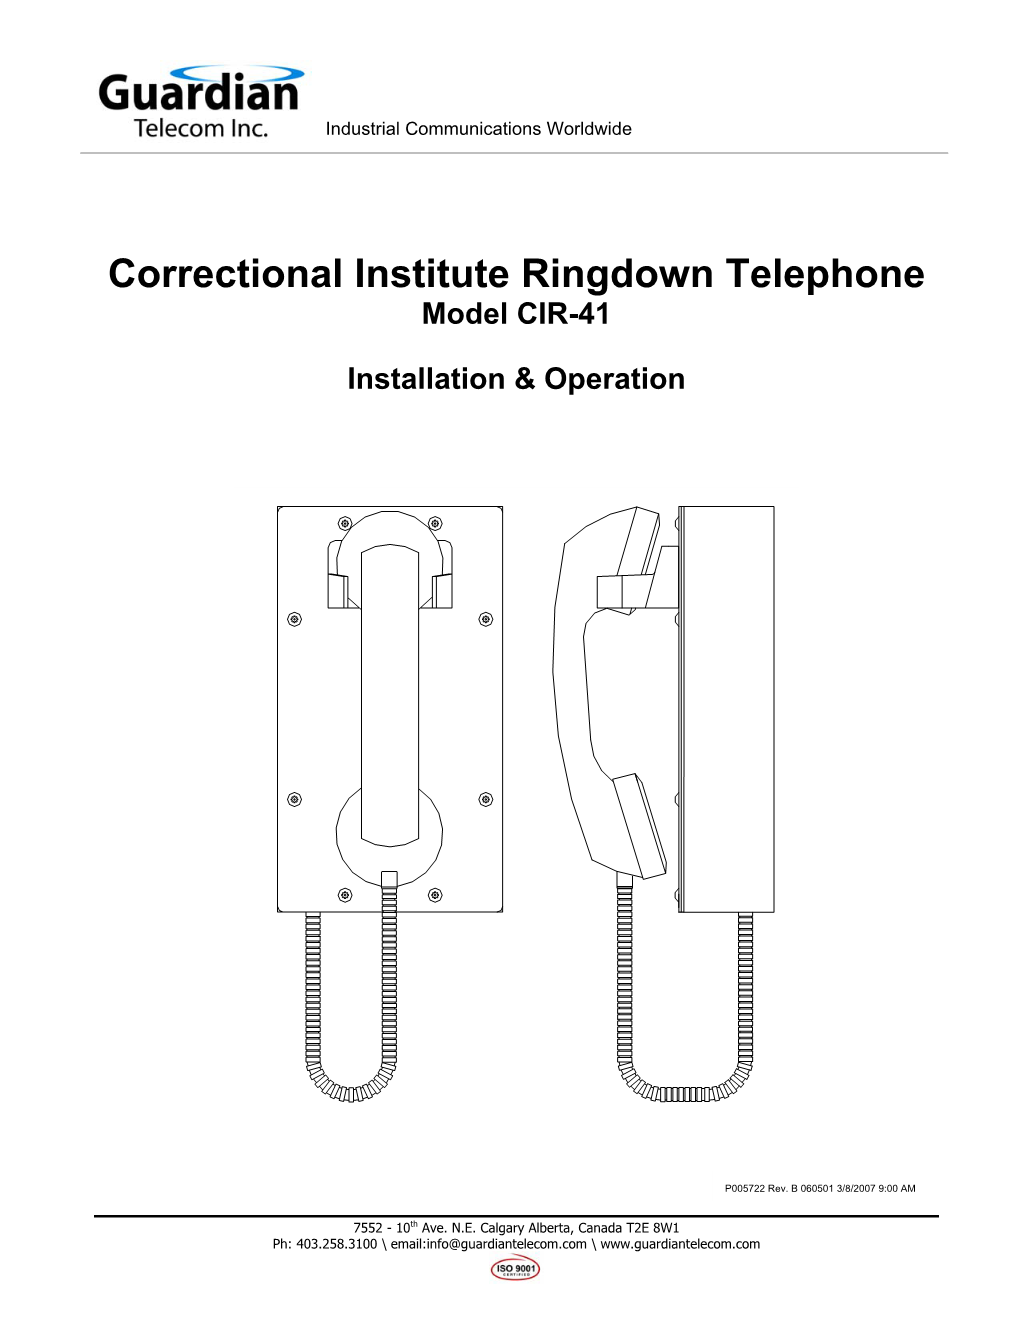 Correctional Institute Ringdown Telephone Model CIR-41